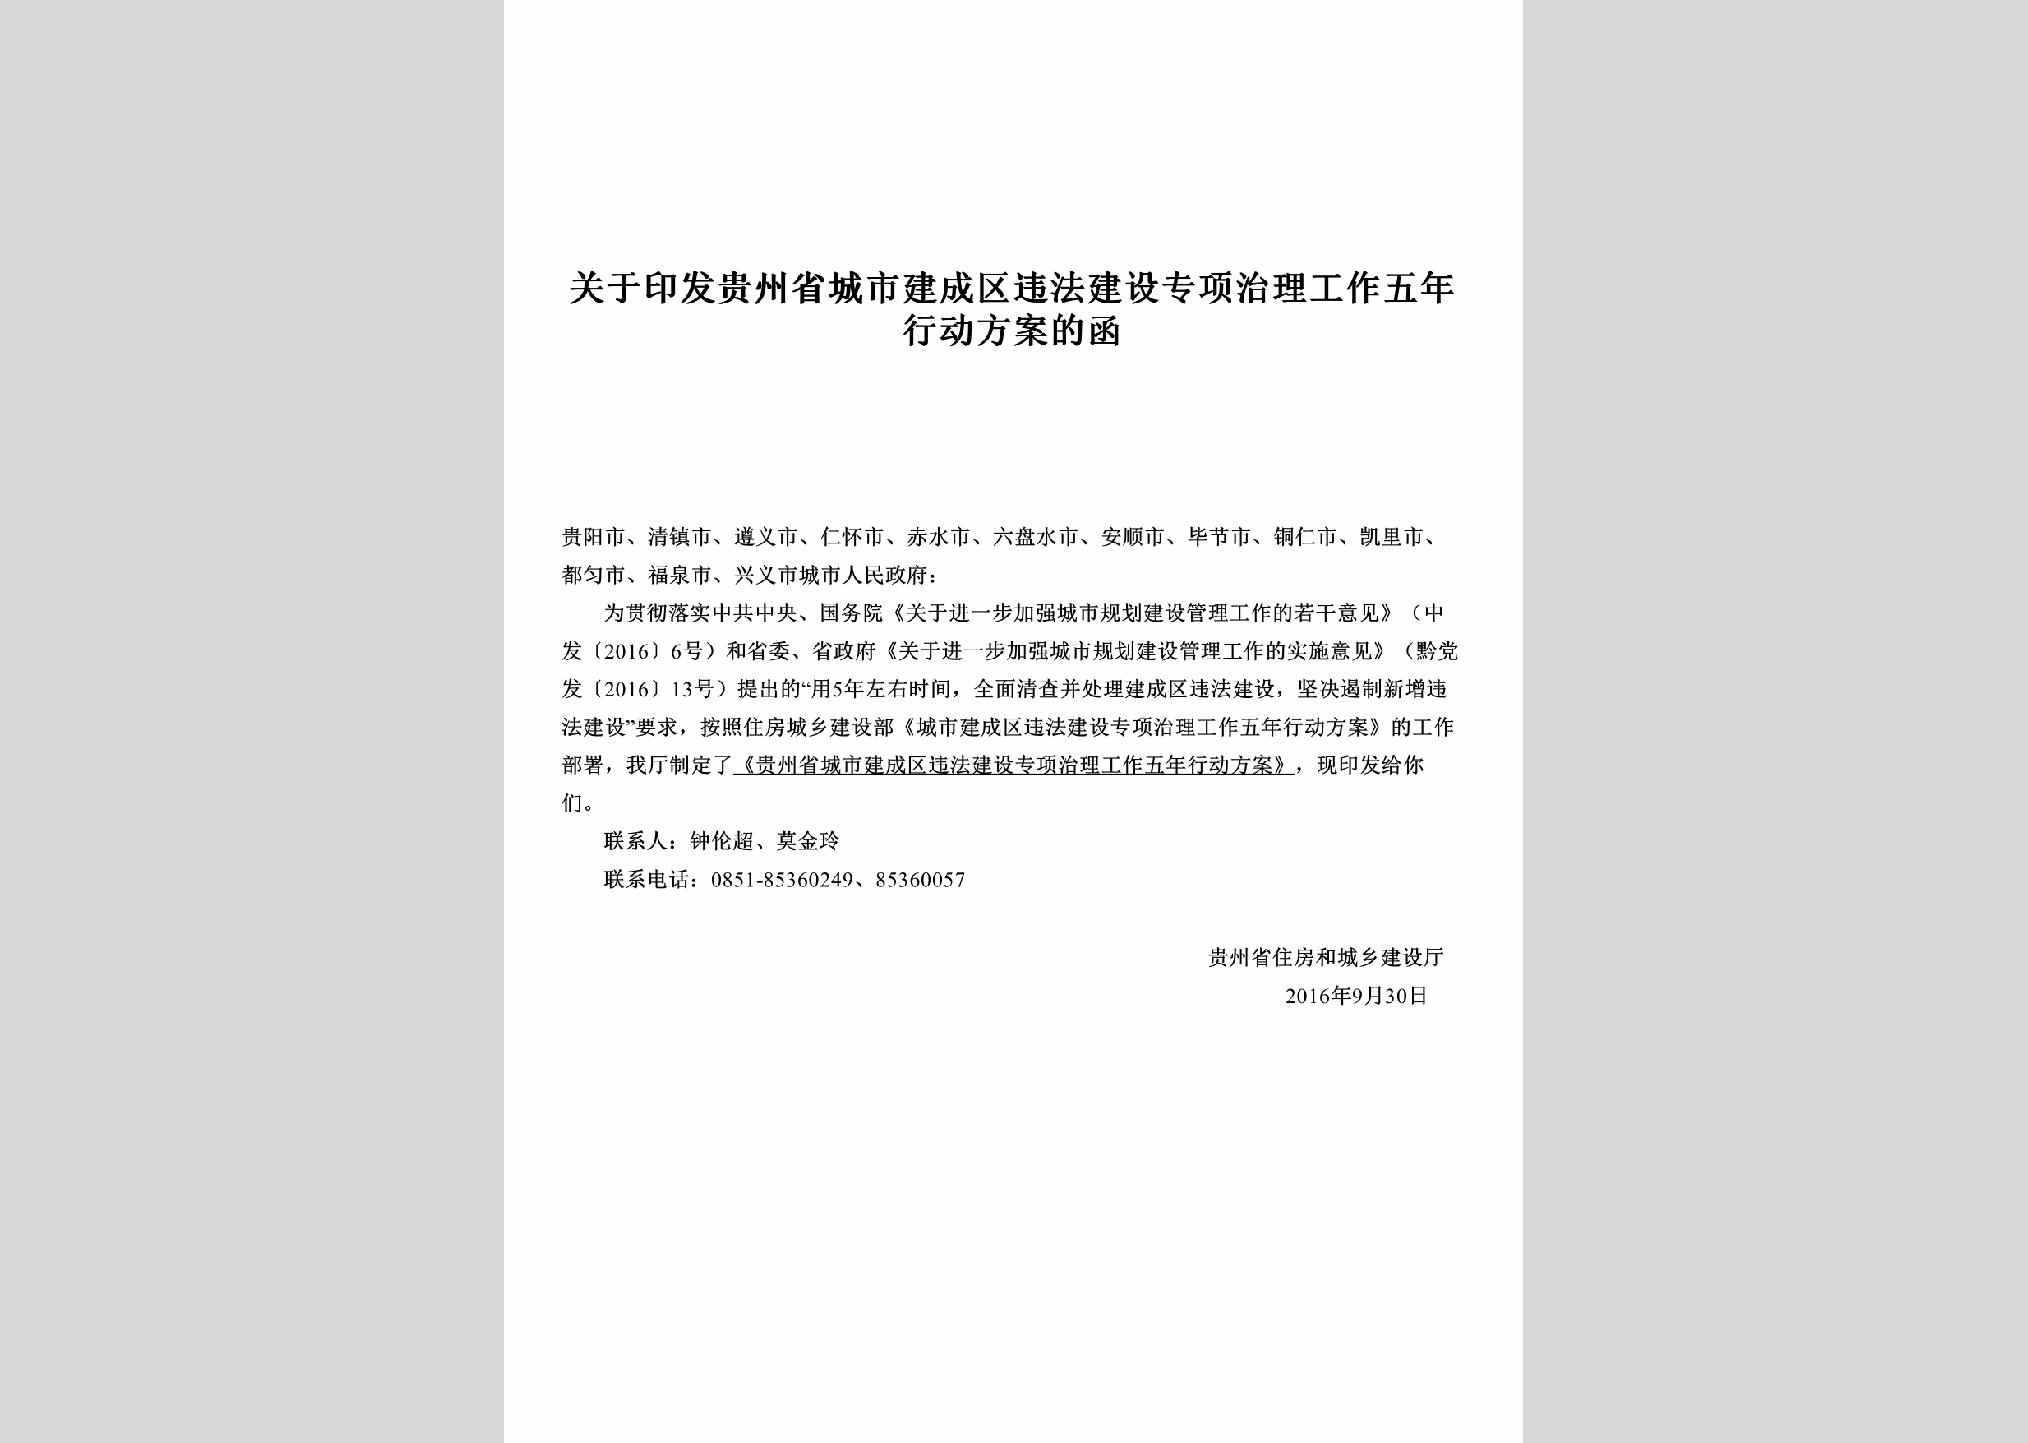 GZ-WFJSZLH-2016：关于印发贵州省城市建成区违法建设专项治理工作五年行动方案的函